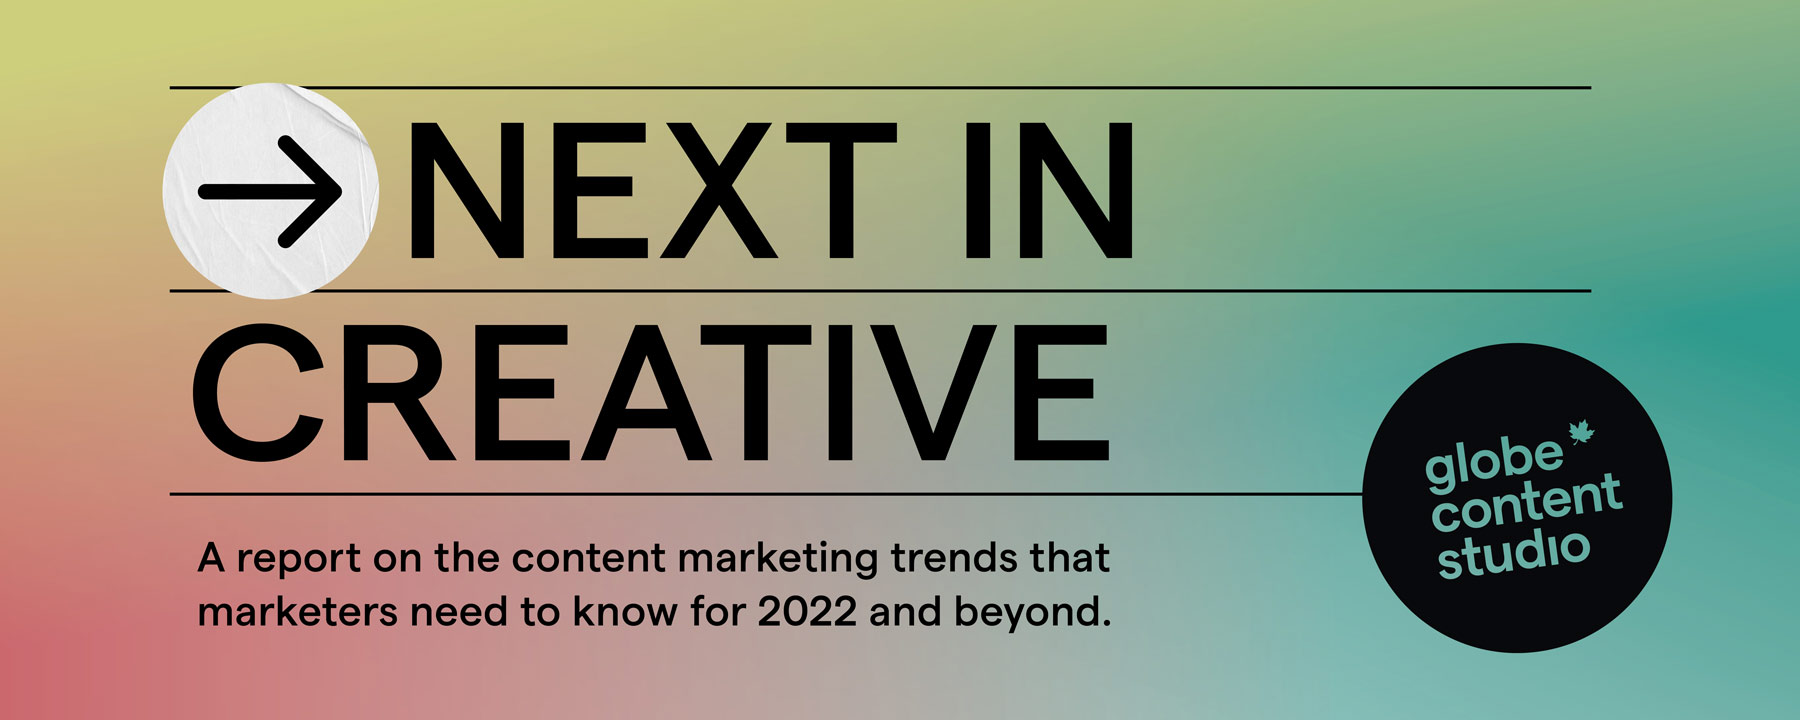 Next in Creative: Marketing Trends Report 2022